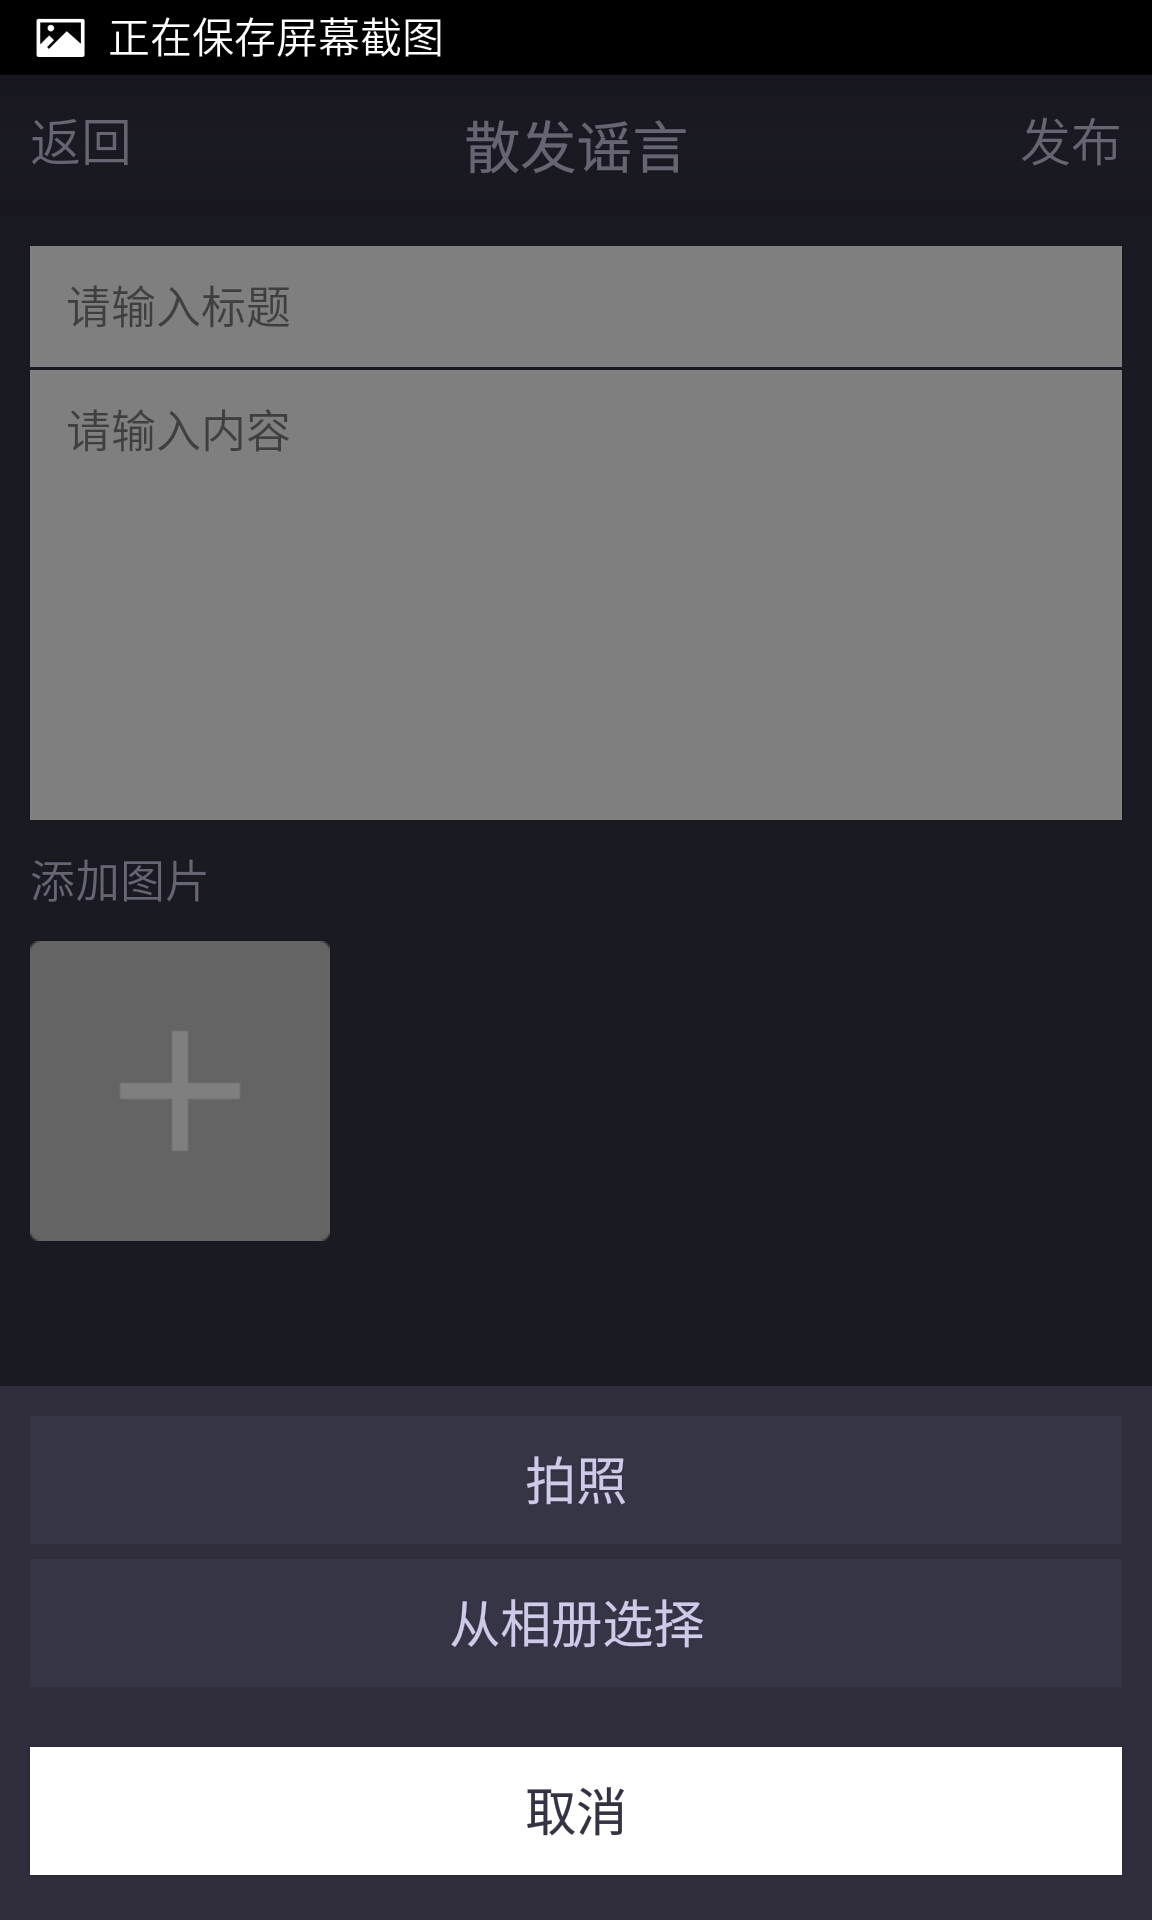 app上传raw格式图片操作说明 - 承影互联（北京）科技有限公司 - 客户支持服务平台